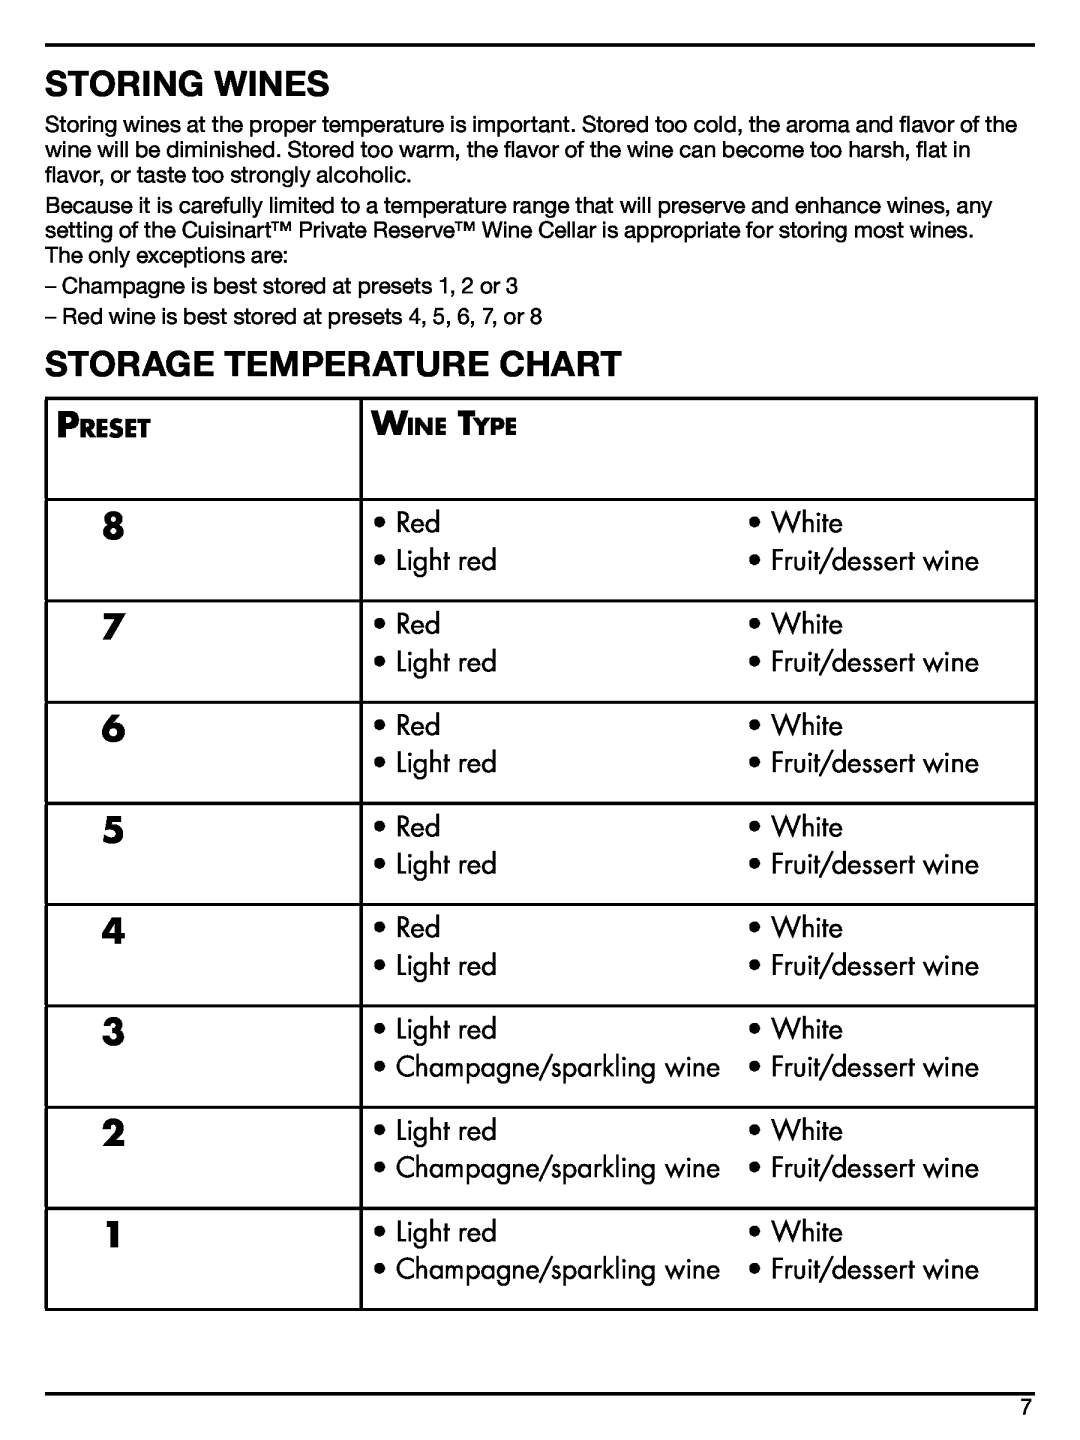 Cuisinart CWC-600 manual Storing Wines, Storage Temperature Chart, reset 